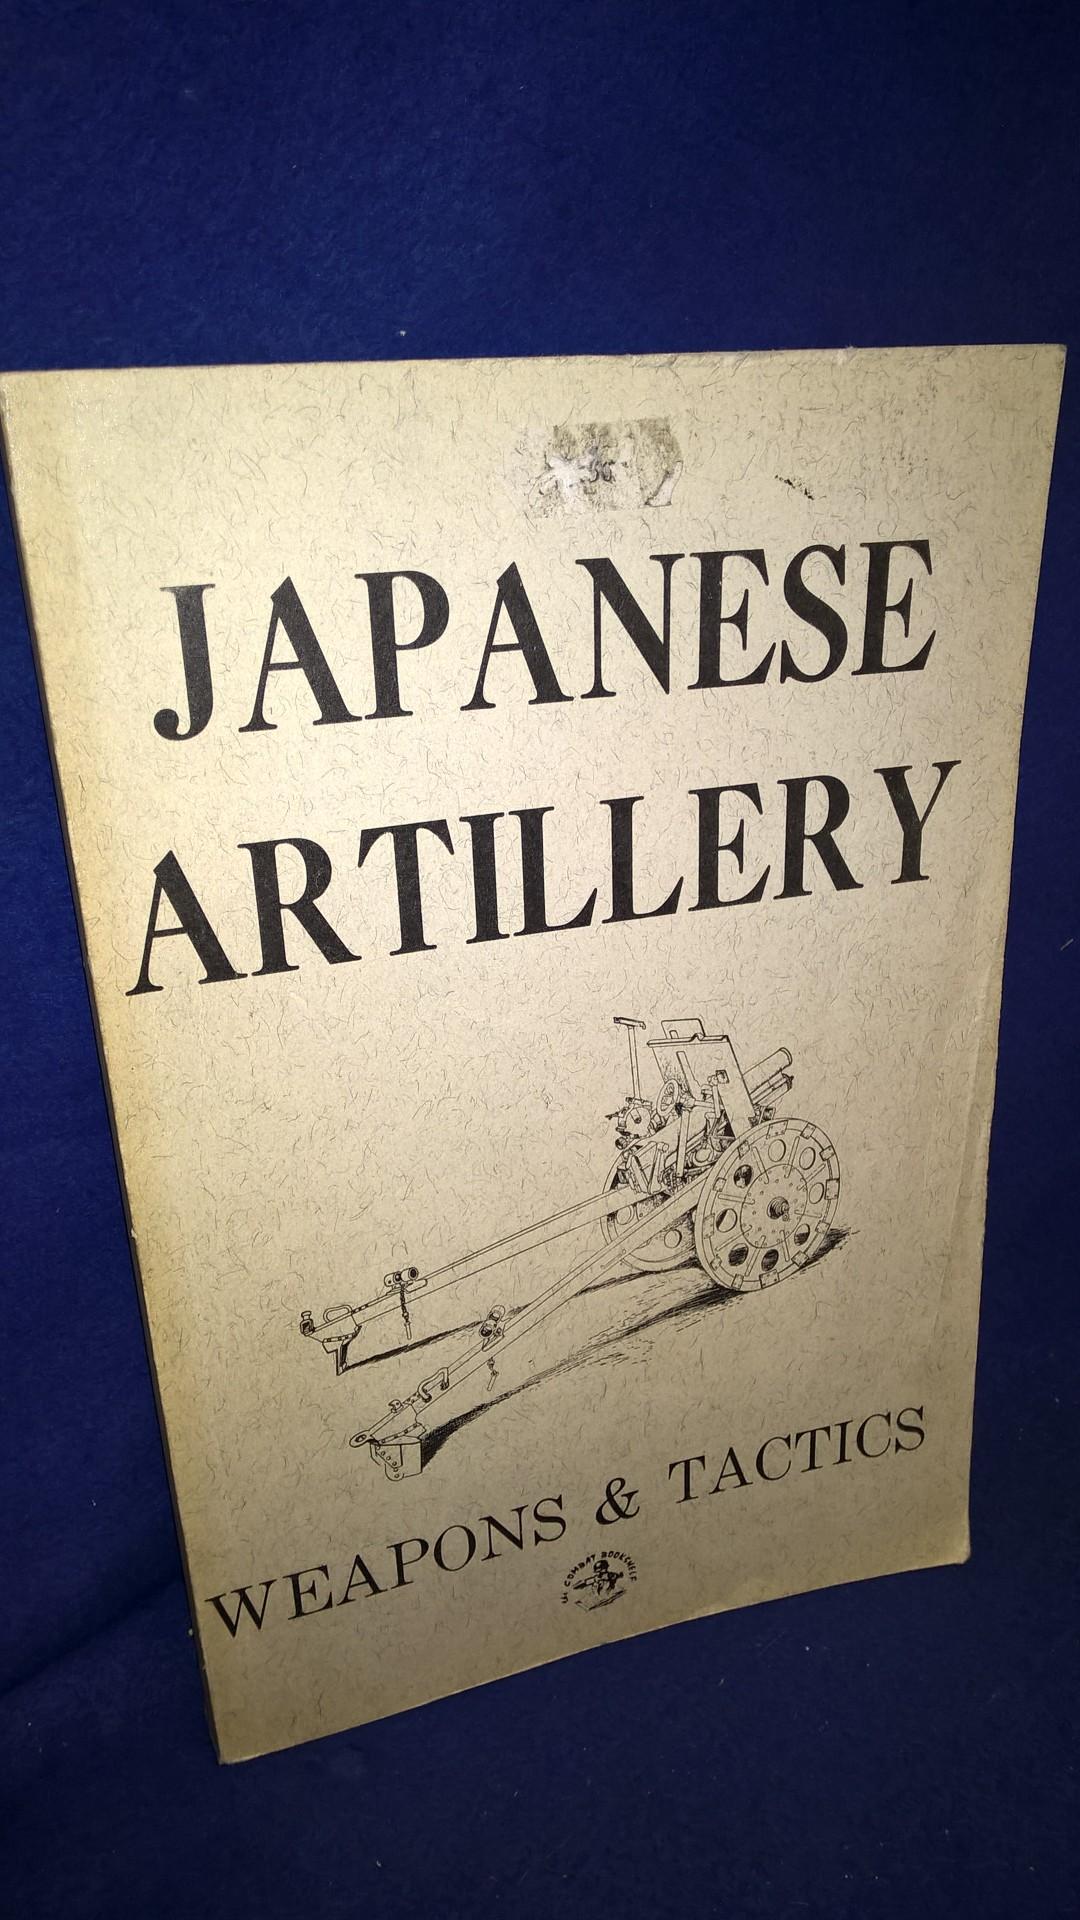 Japanese Artillery Weapons & Tactics